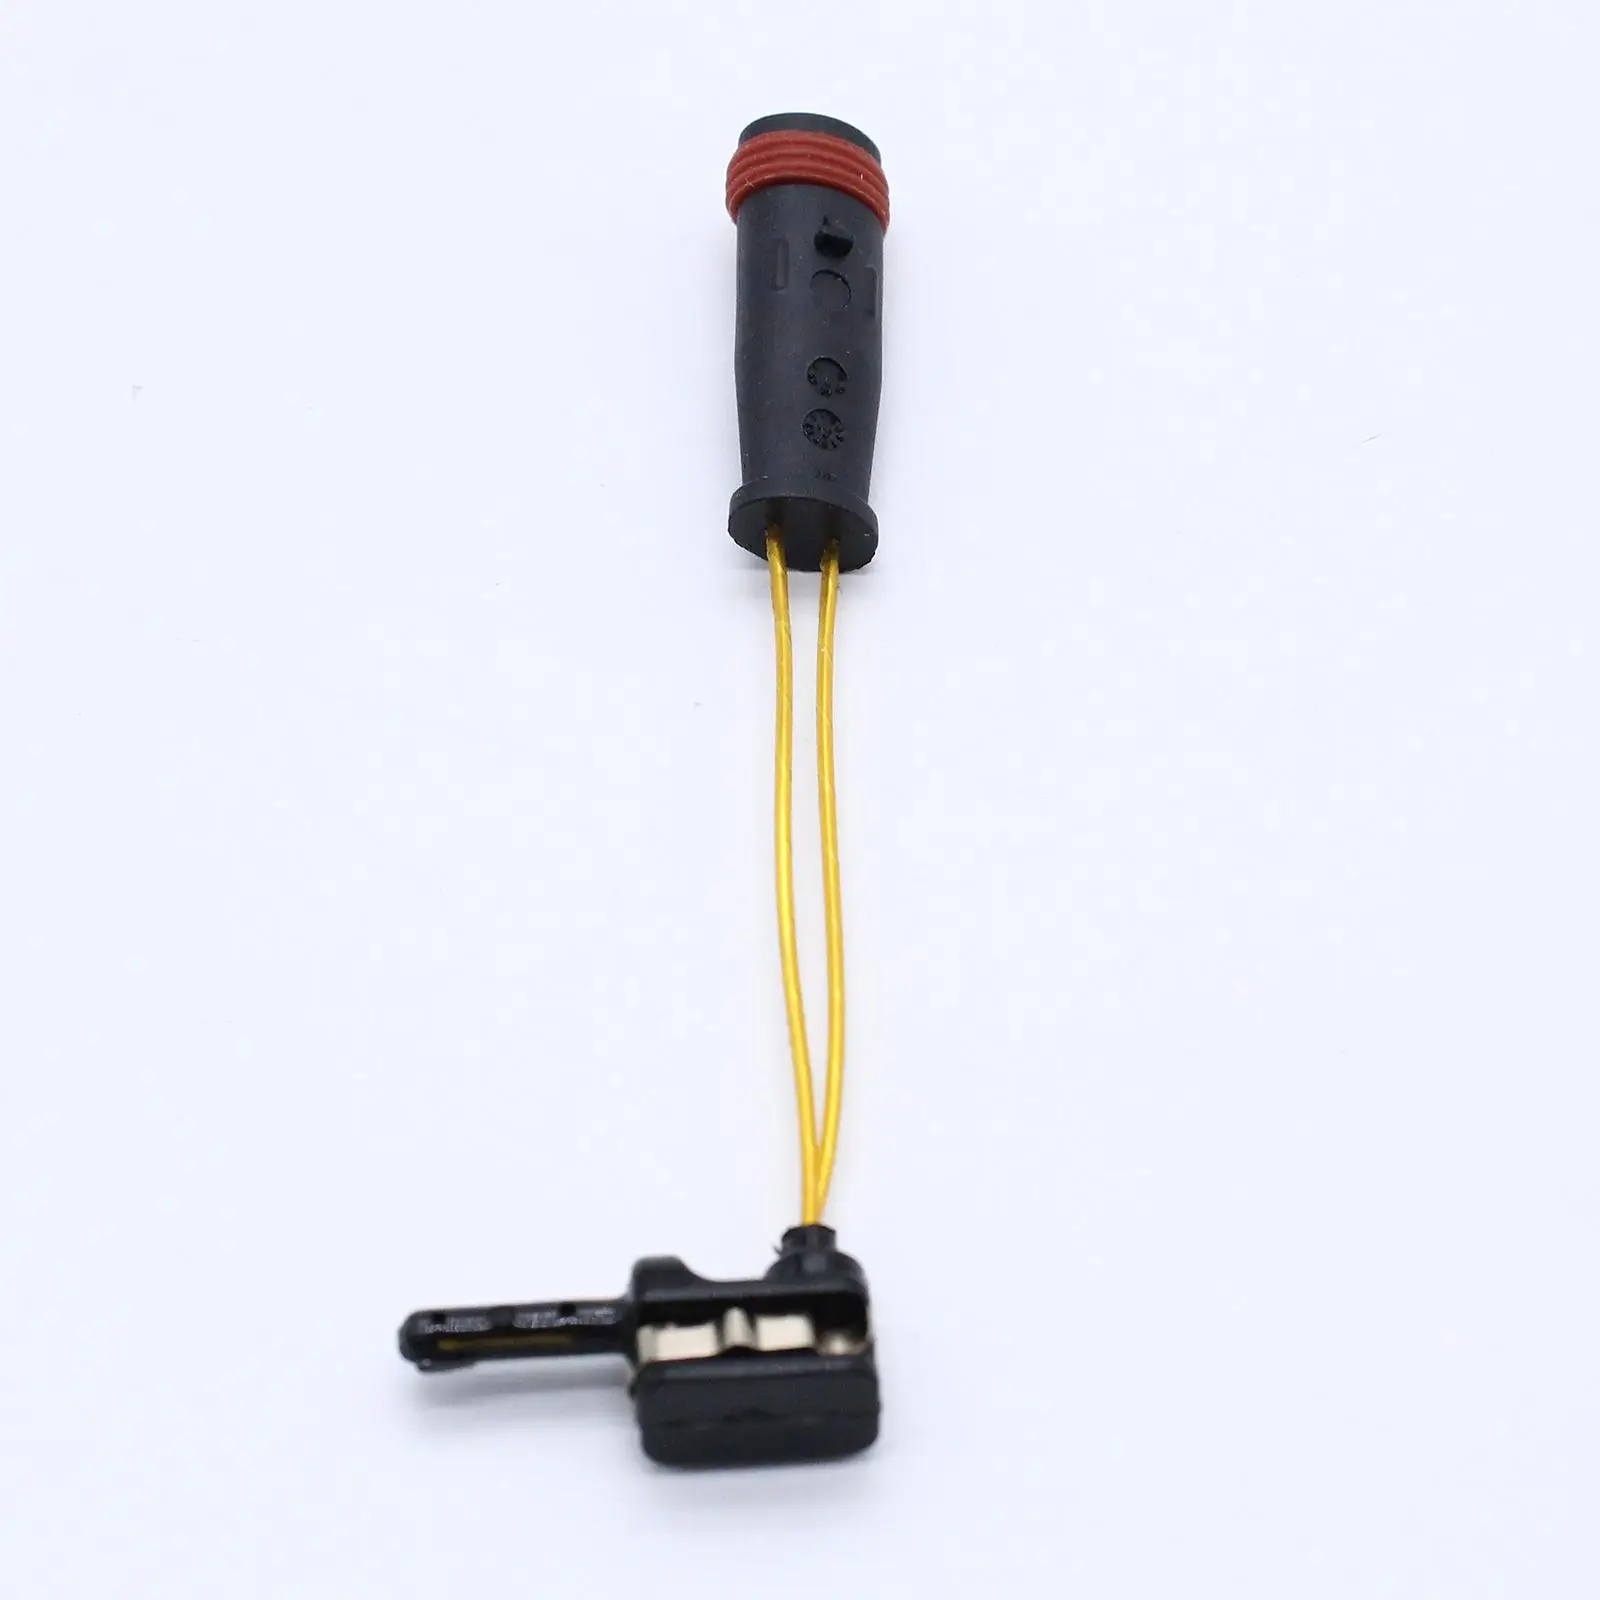 Automotive 2115401717 Brake Pad Wear Indicator Sensor for W203 W204 W211 CLK SL C E S Class Durable Replacement Premium